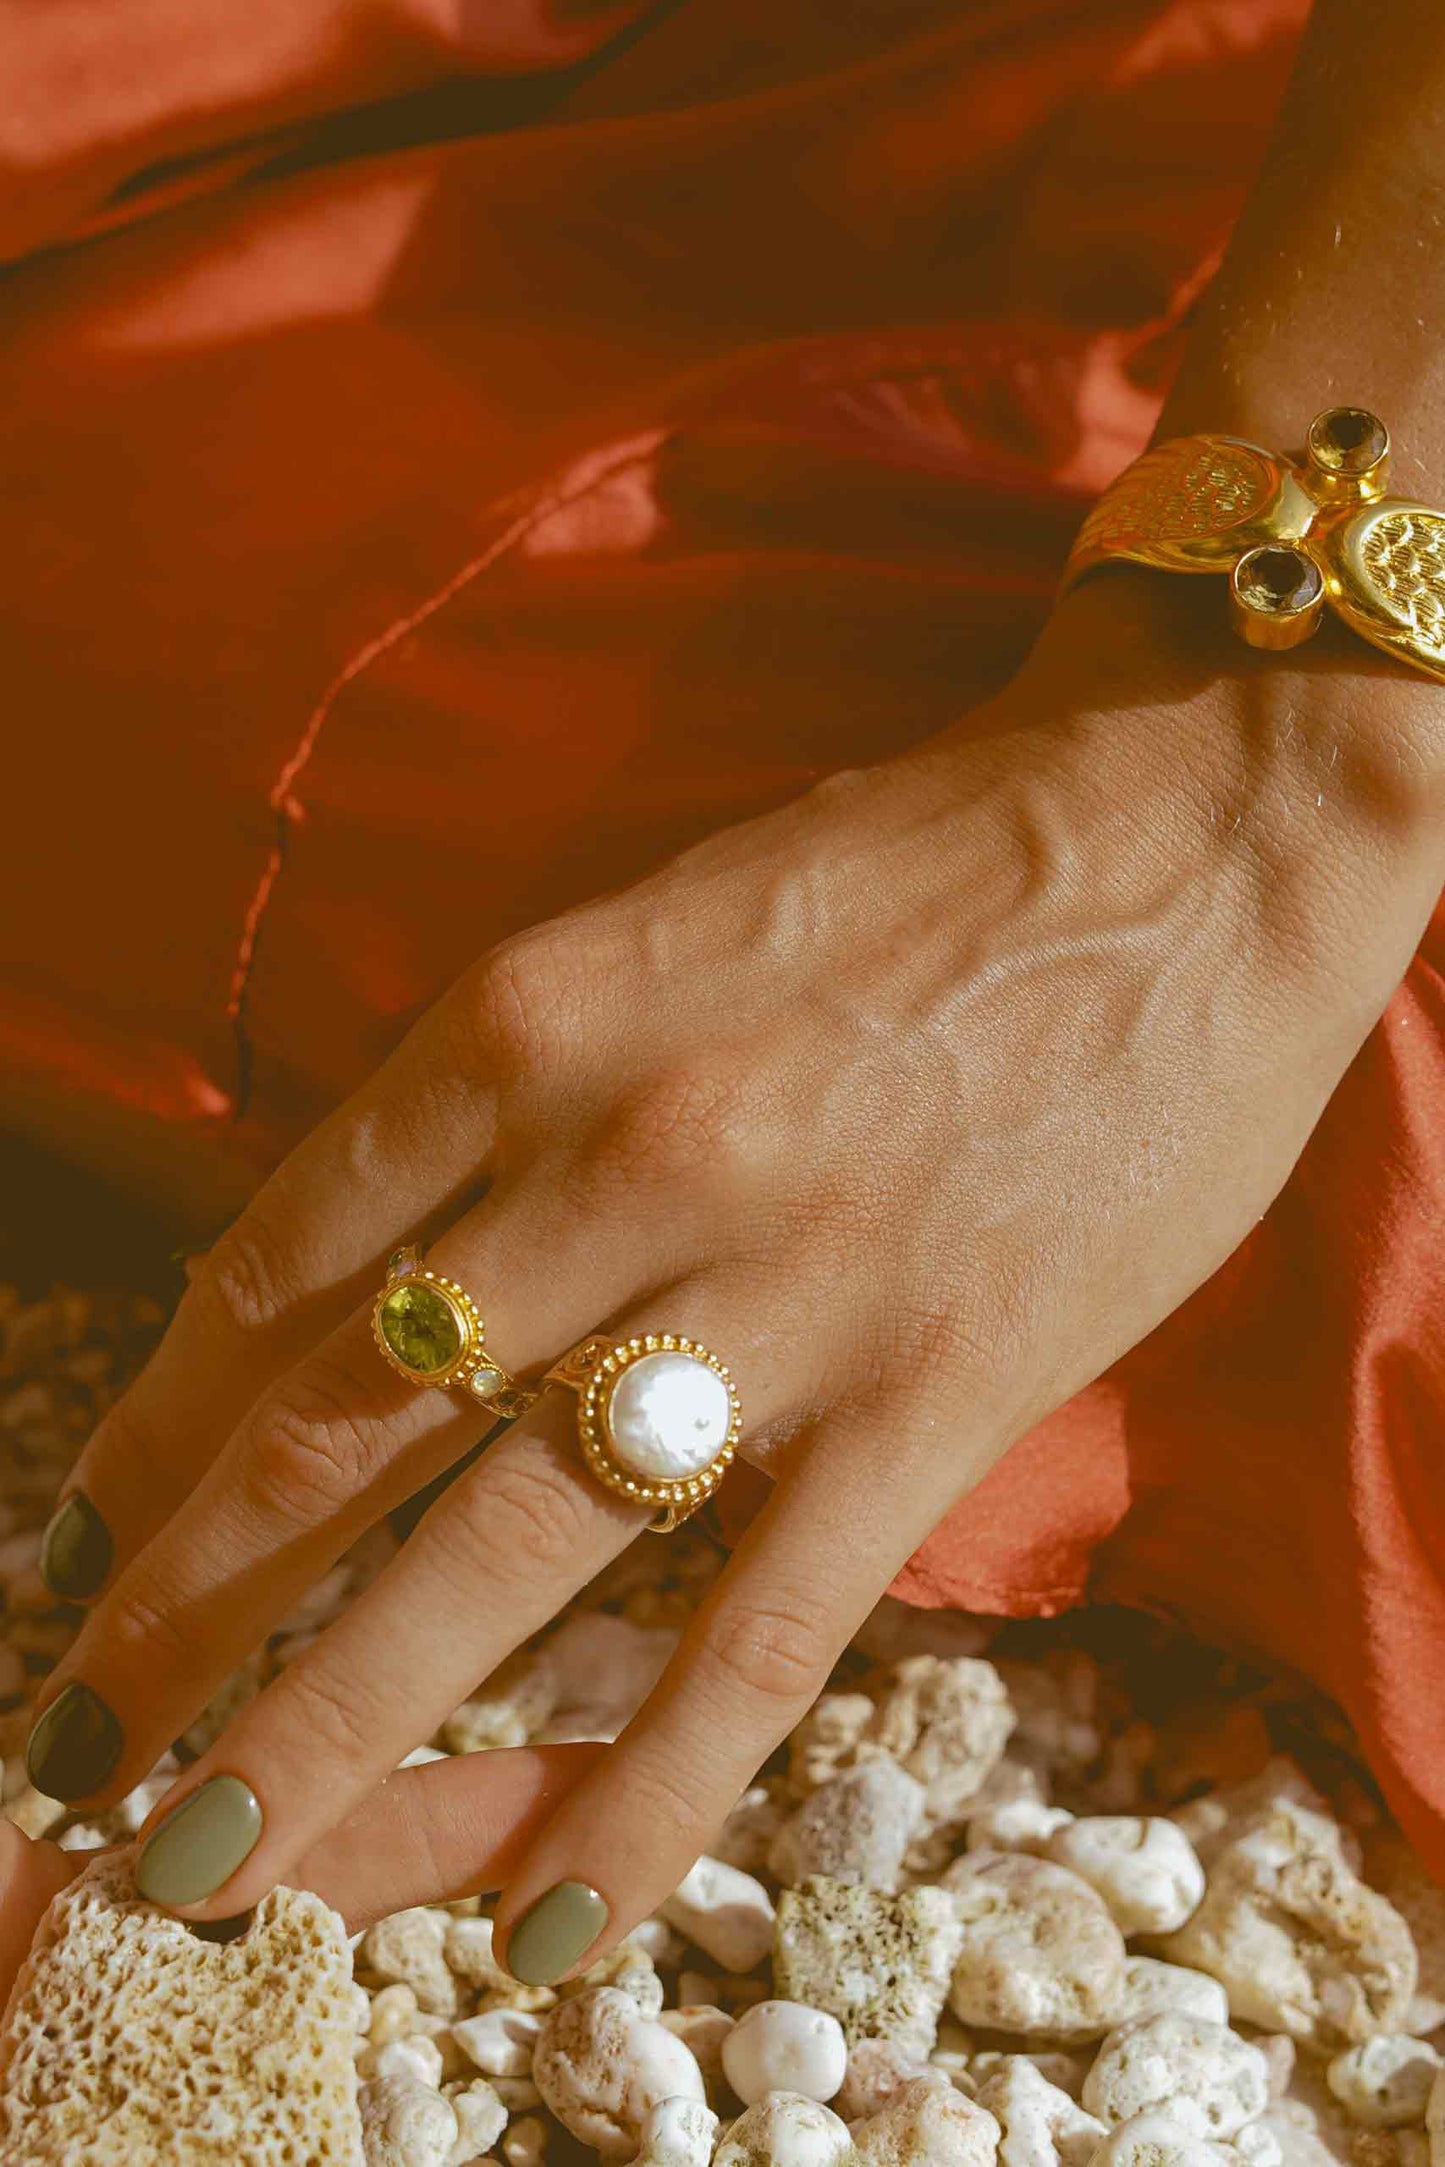 Pearl Goddess Ring